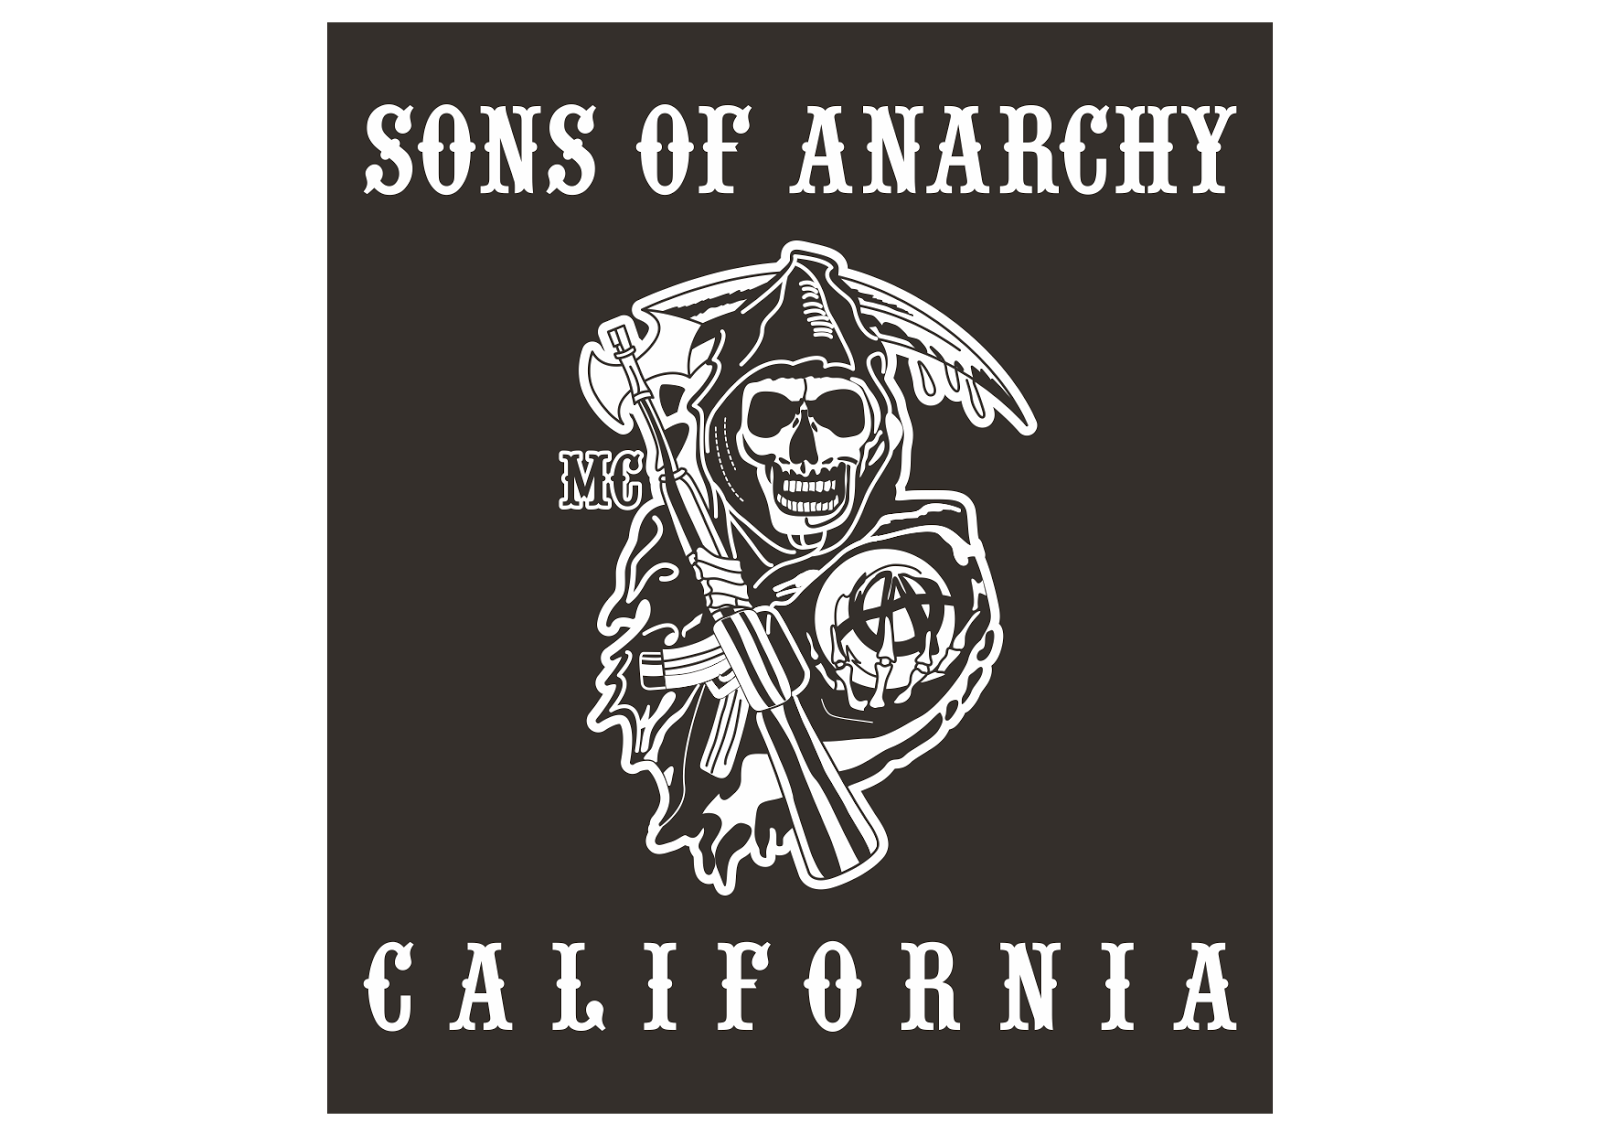 Sons of Anarchy season 1 - Wikipedia